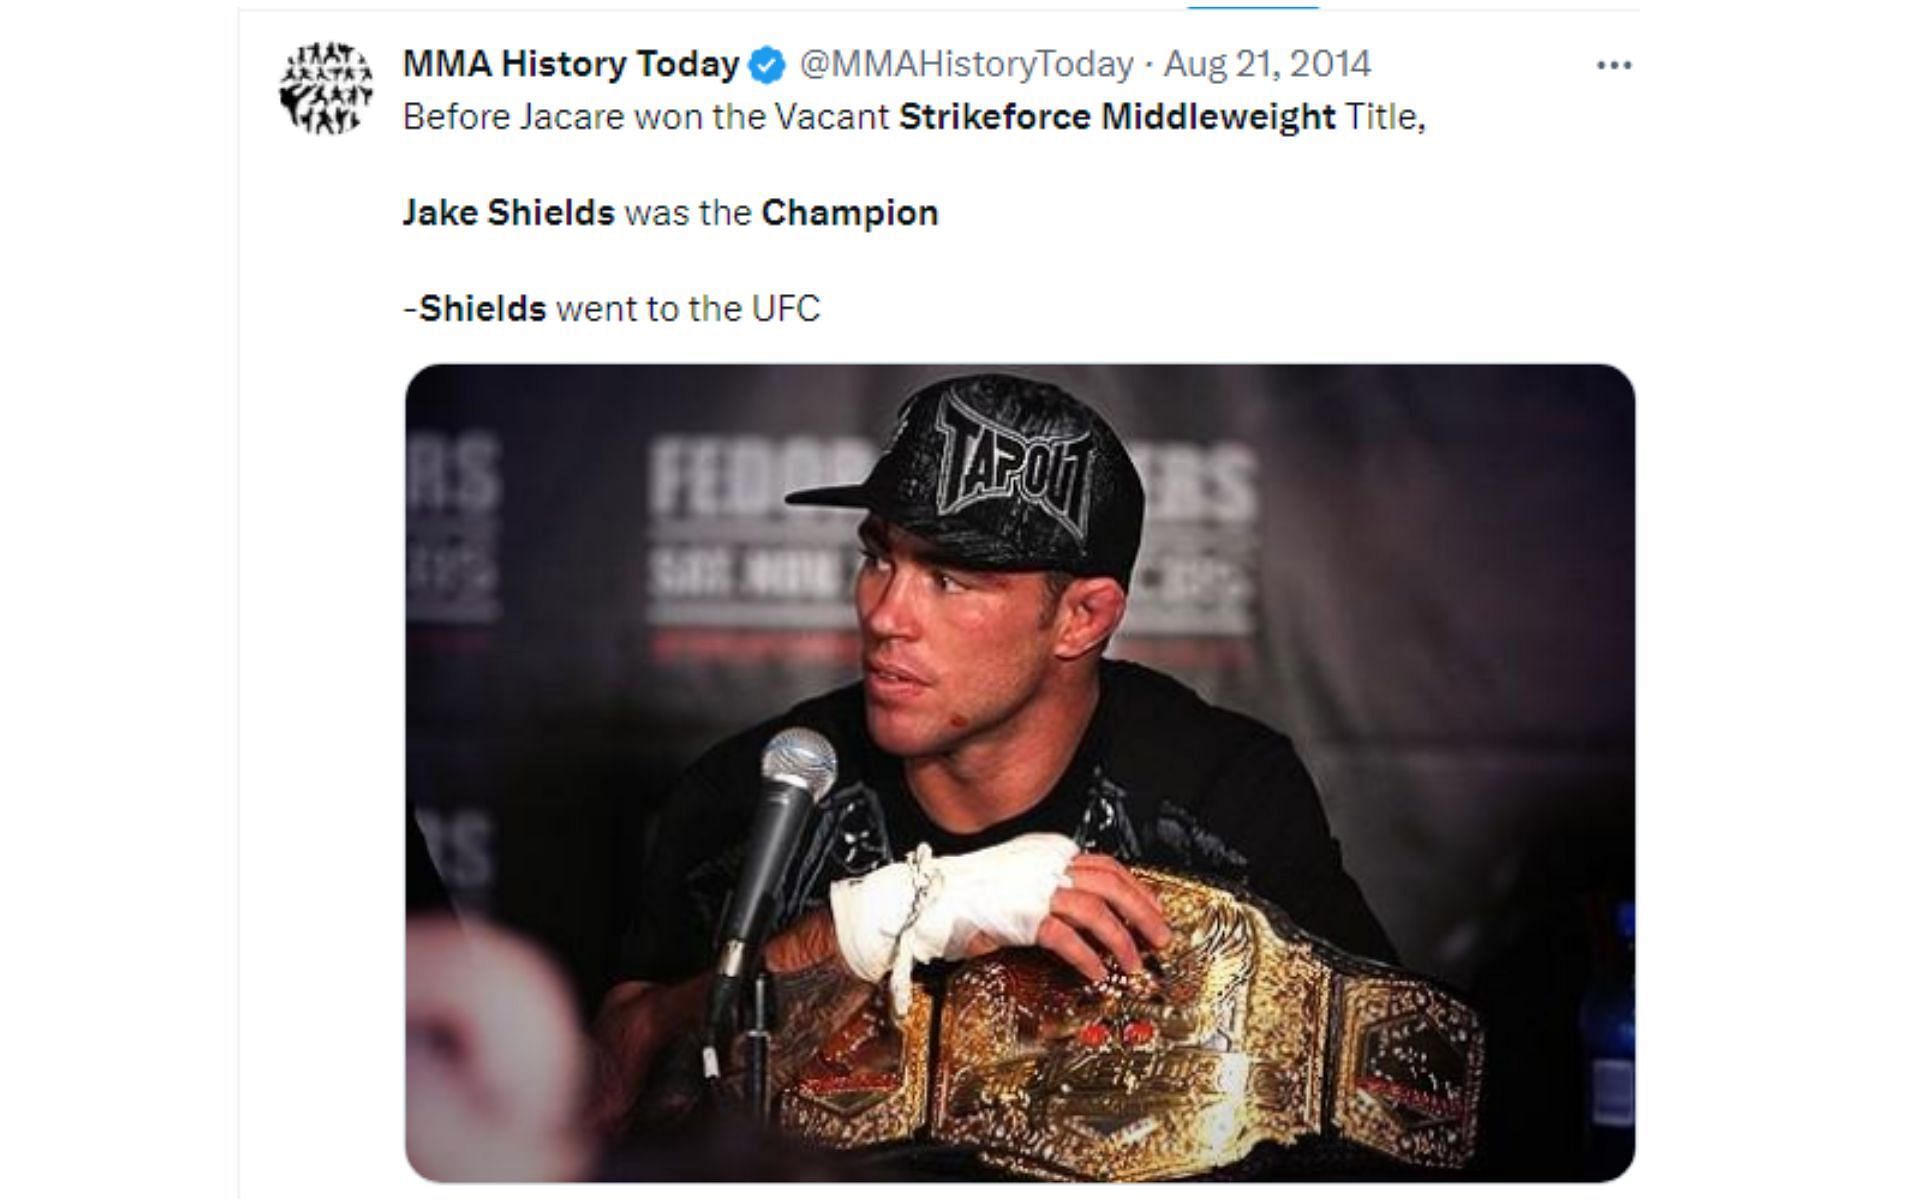 MMA History Today tweet regarding Strikeforce middleweight champion